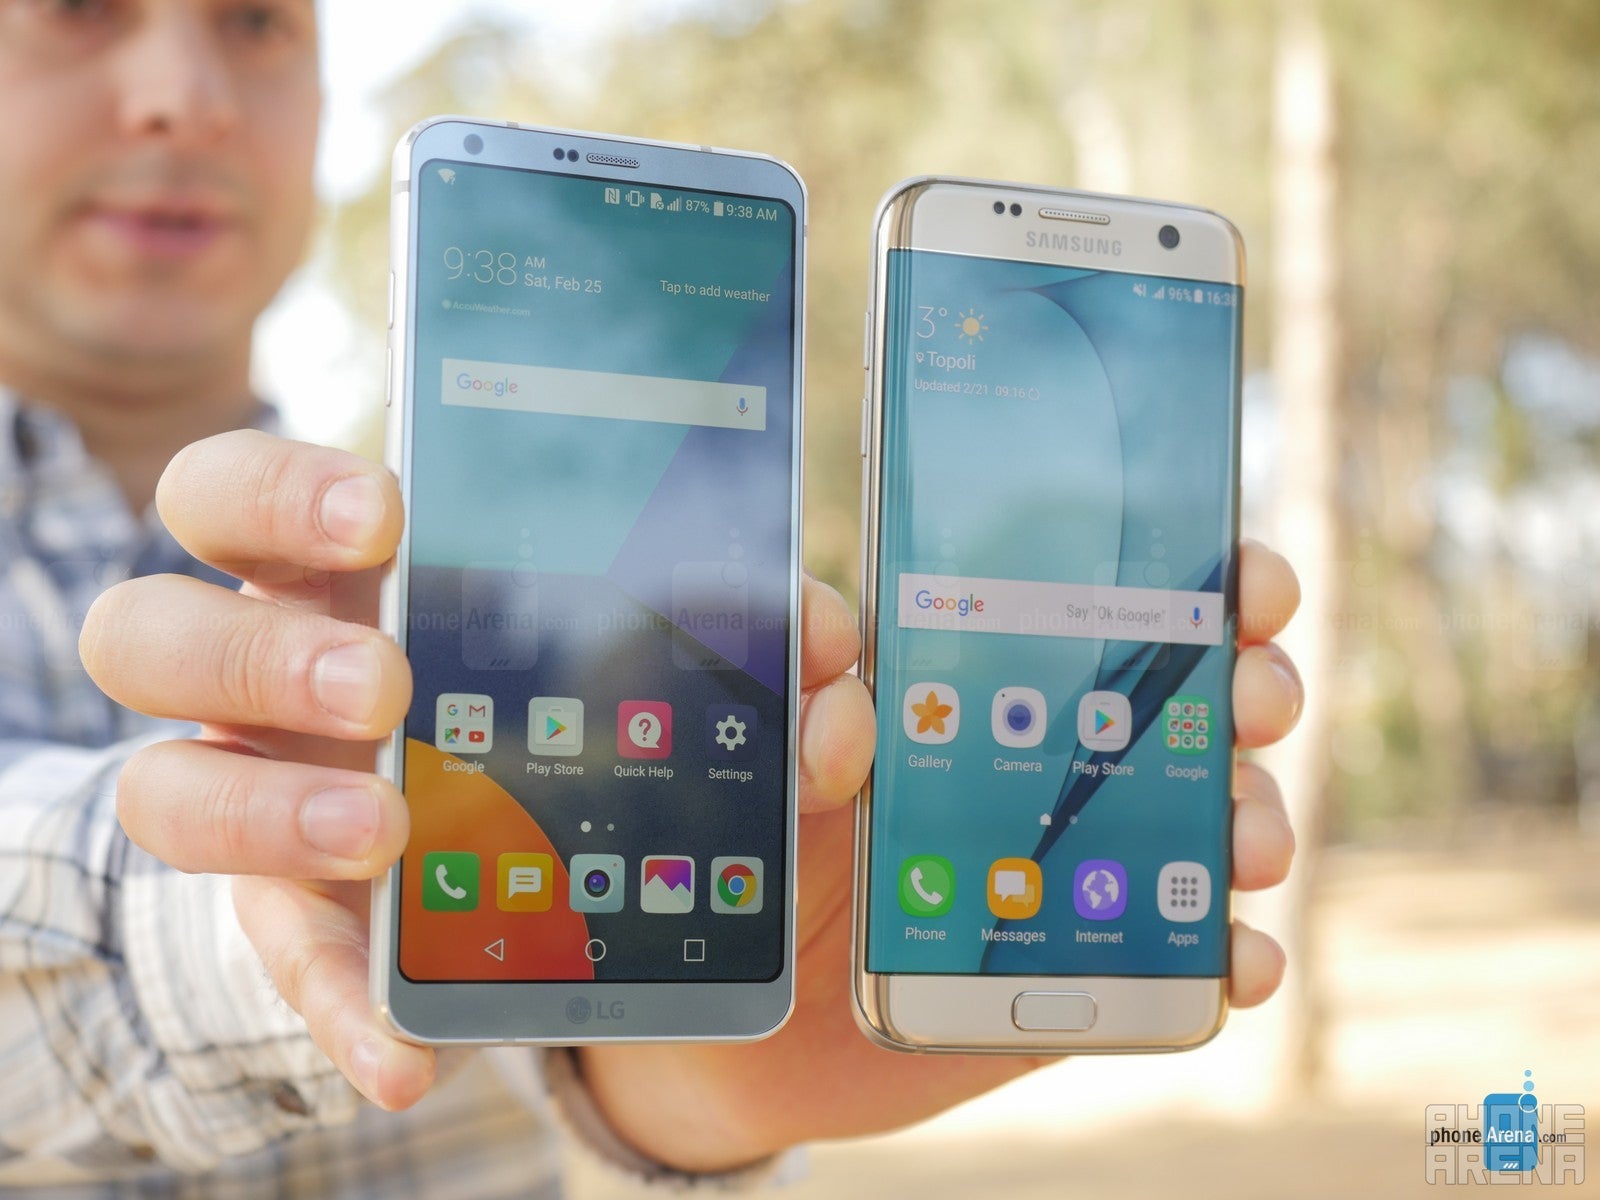 LG G6 vs Samsung Galaxy S7 edge: From Korea with love